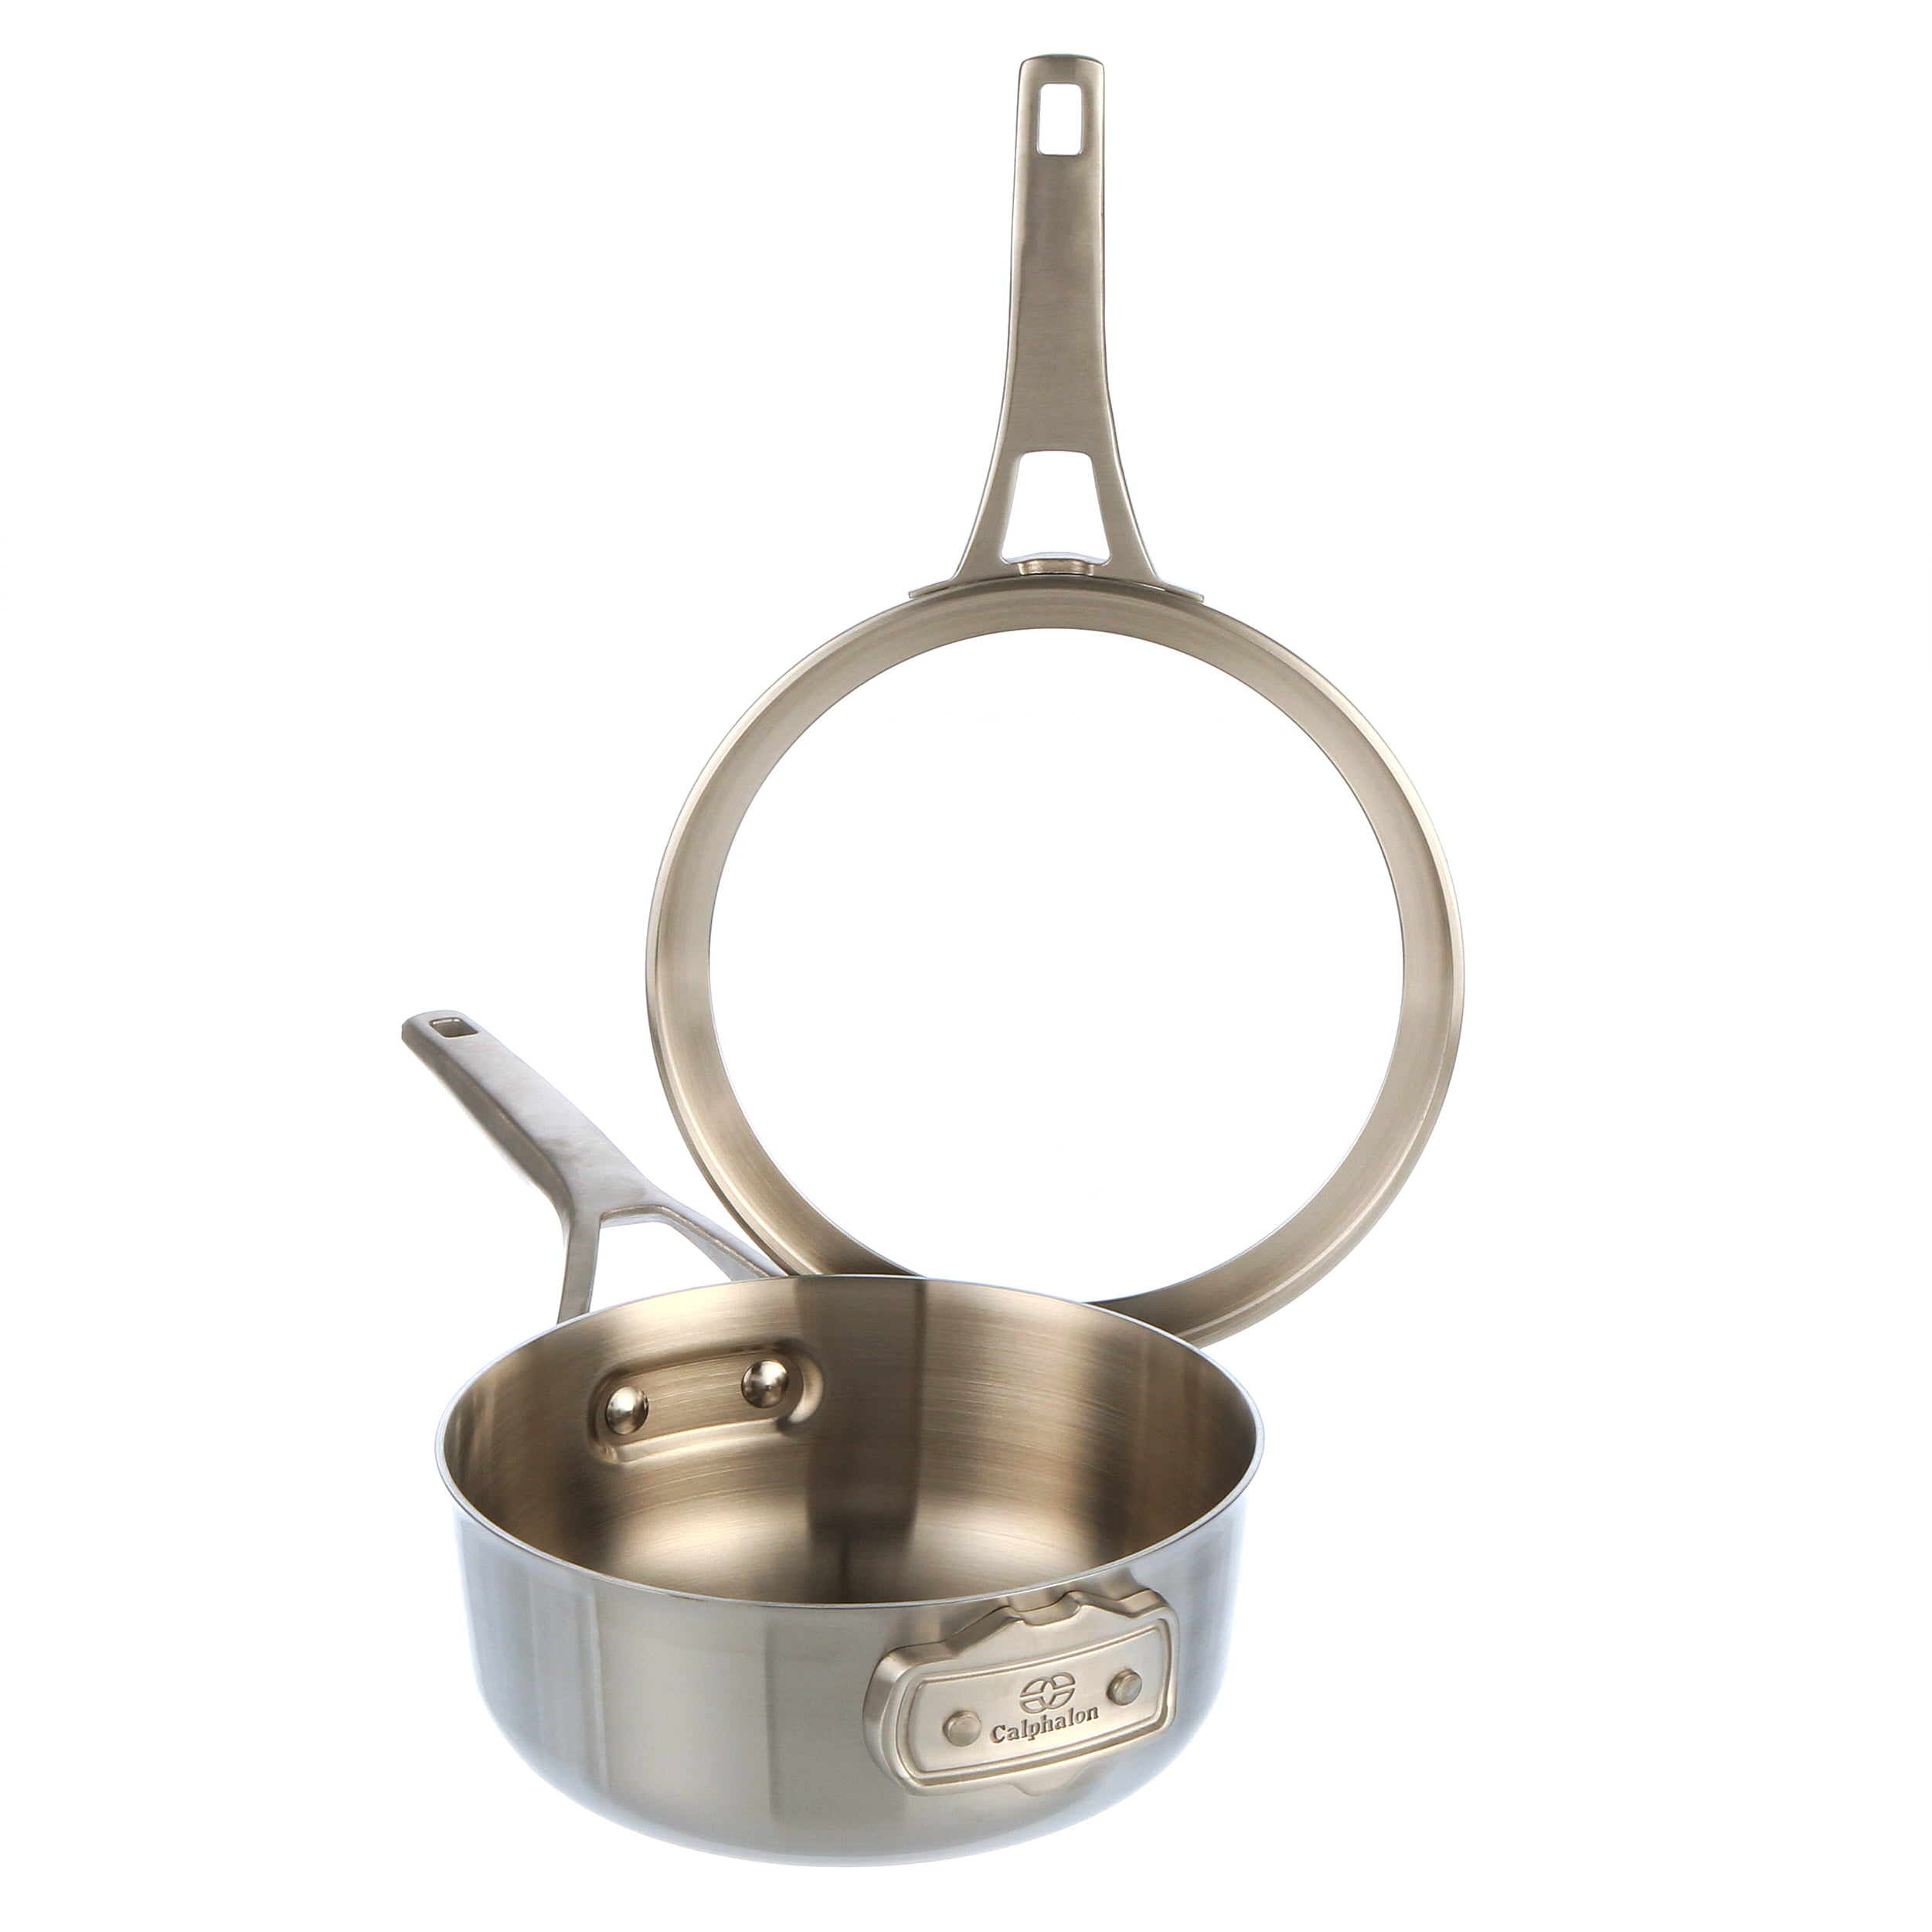 Calphalon Commercial Aluminum Cookware 2.5 Quart Sauce Pot 8702 1/2 W/Lid